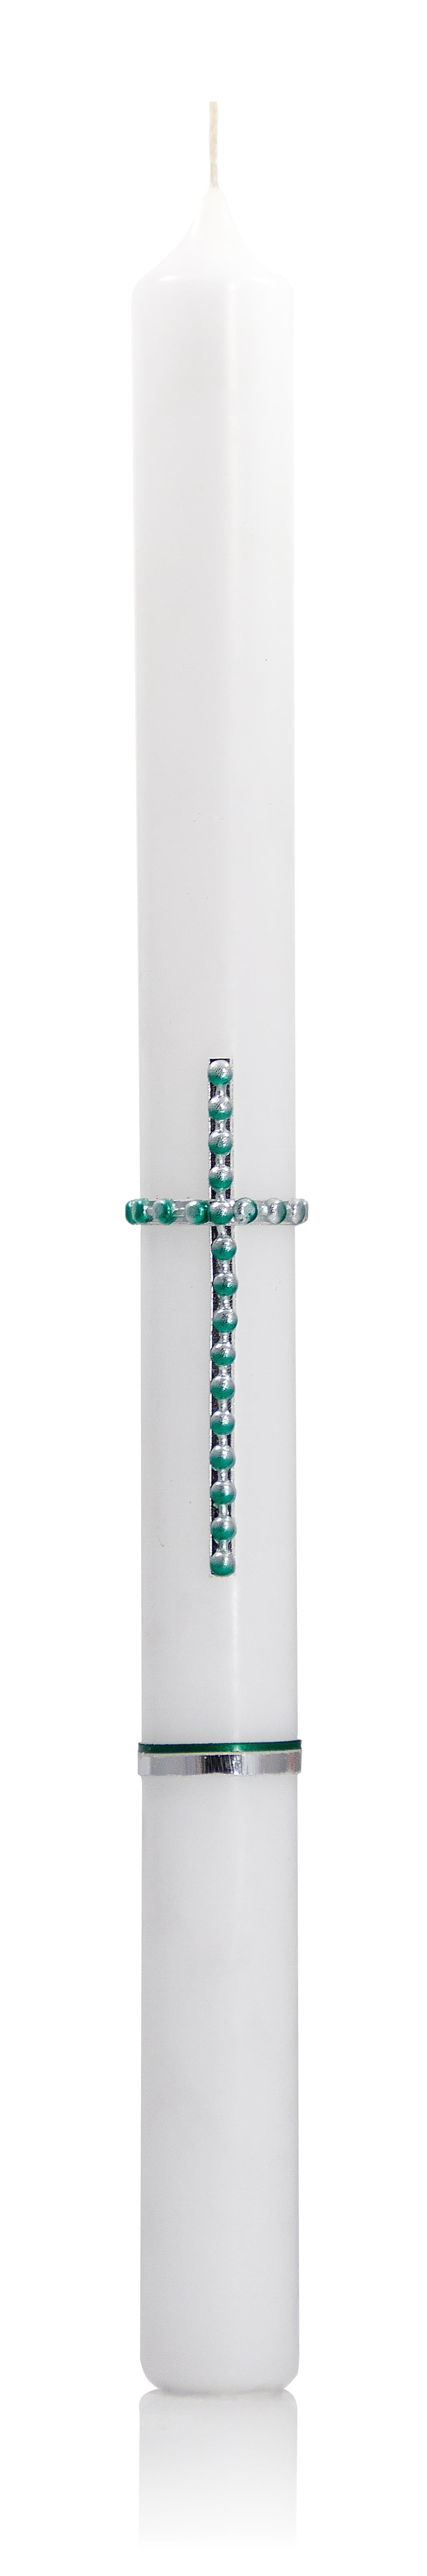 Kommunionkerze Perlenkreuz 415/30mm (Silber)